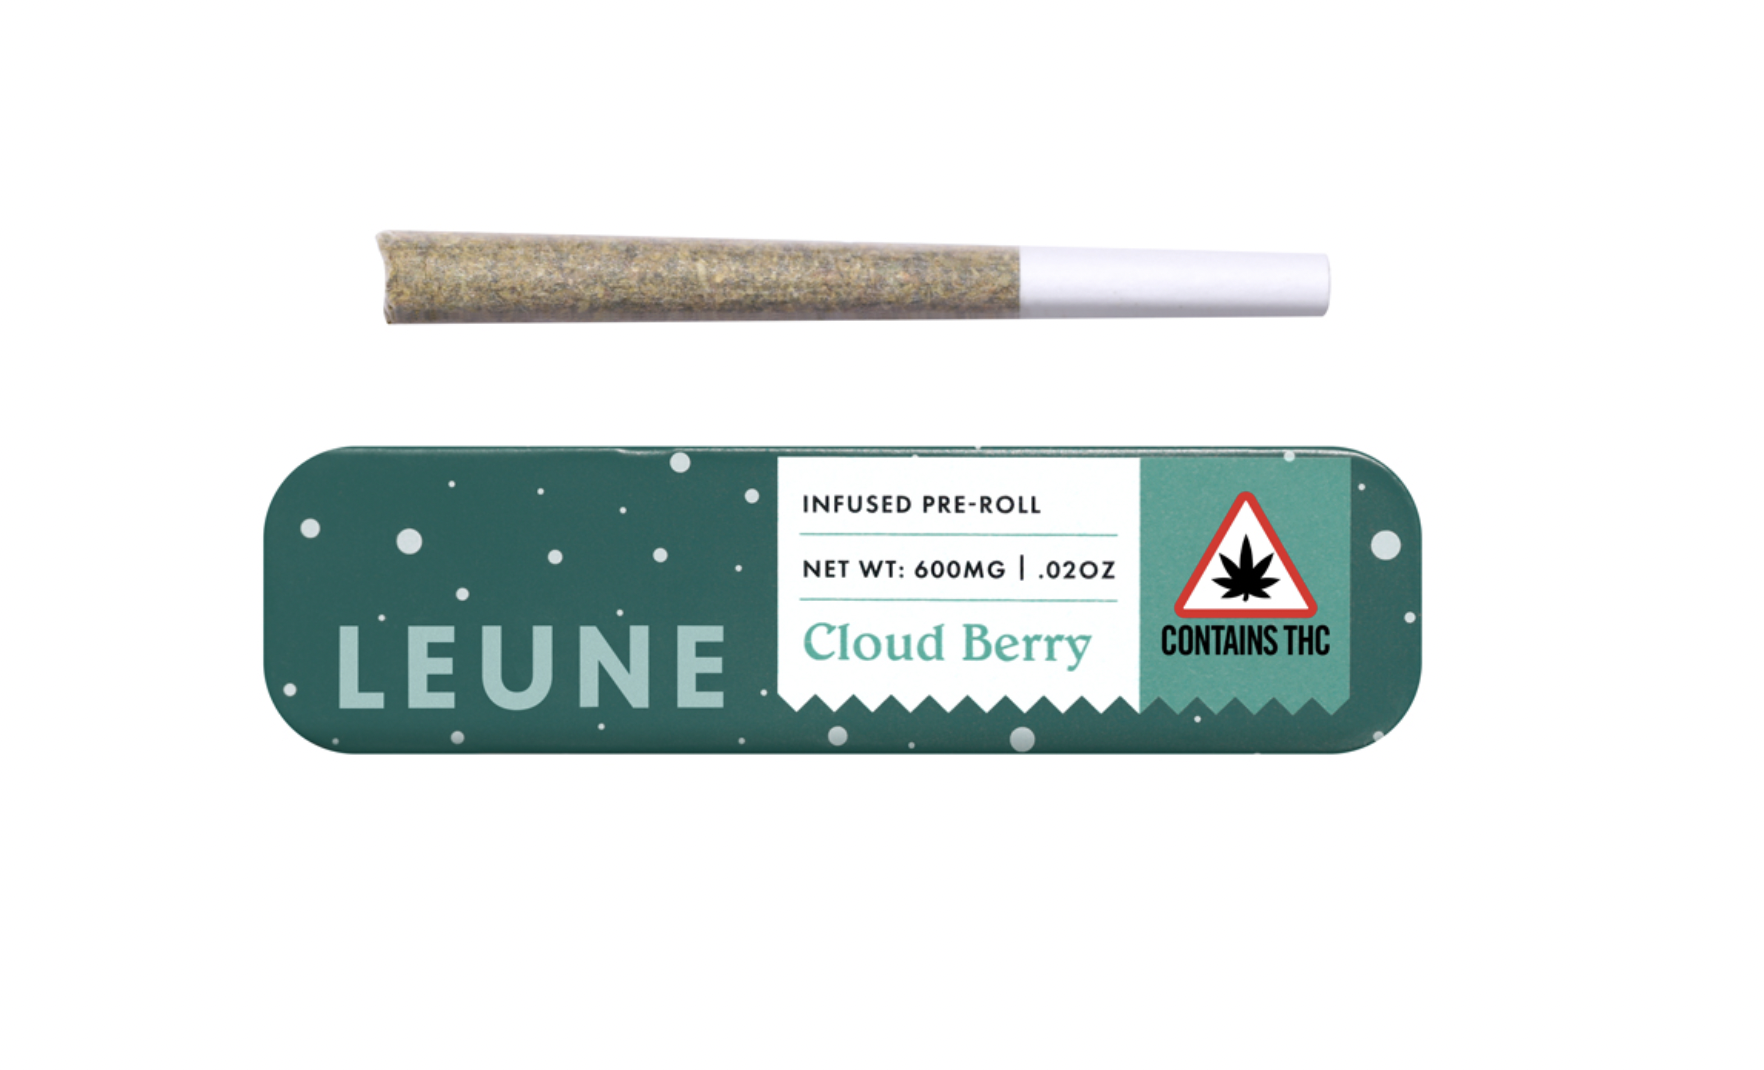 LEUNE Cloud Berry Pre-Roll